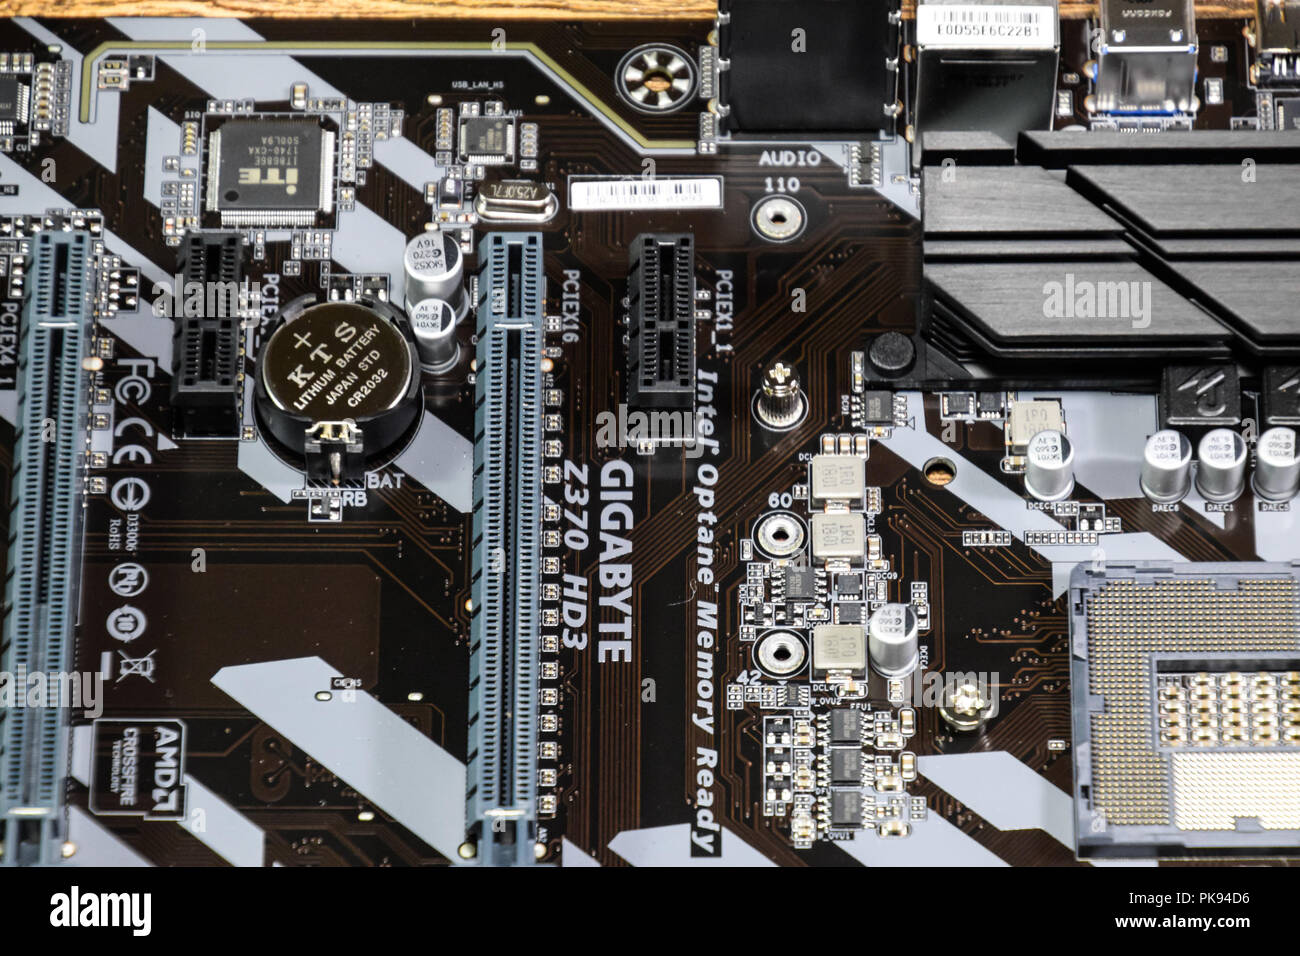 Motherboard Gigabit for the processor Intel. Stock Photo